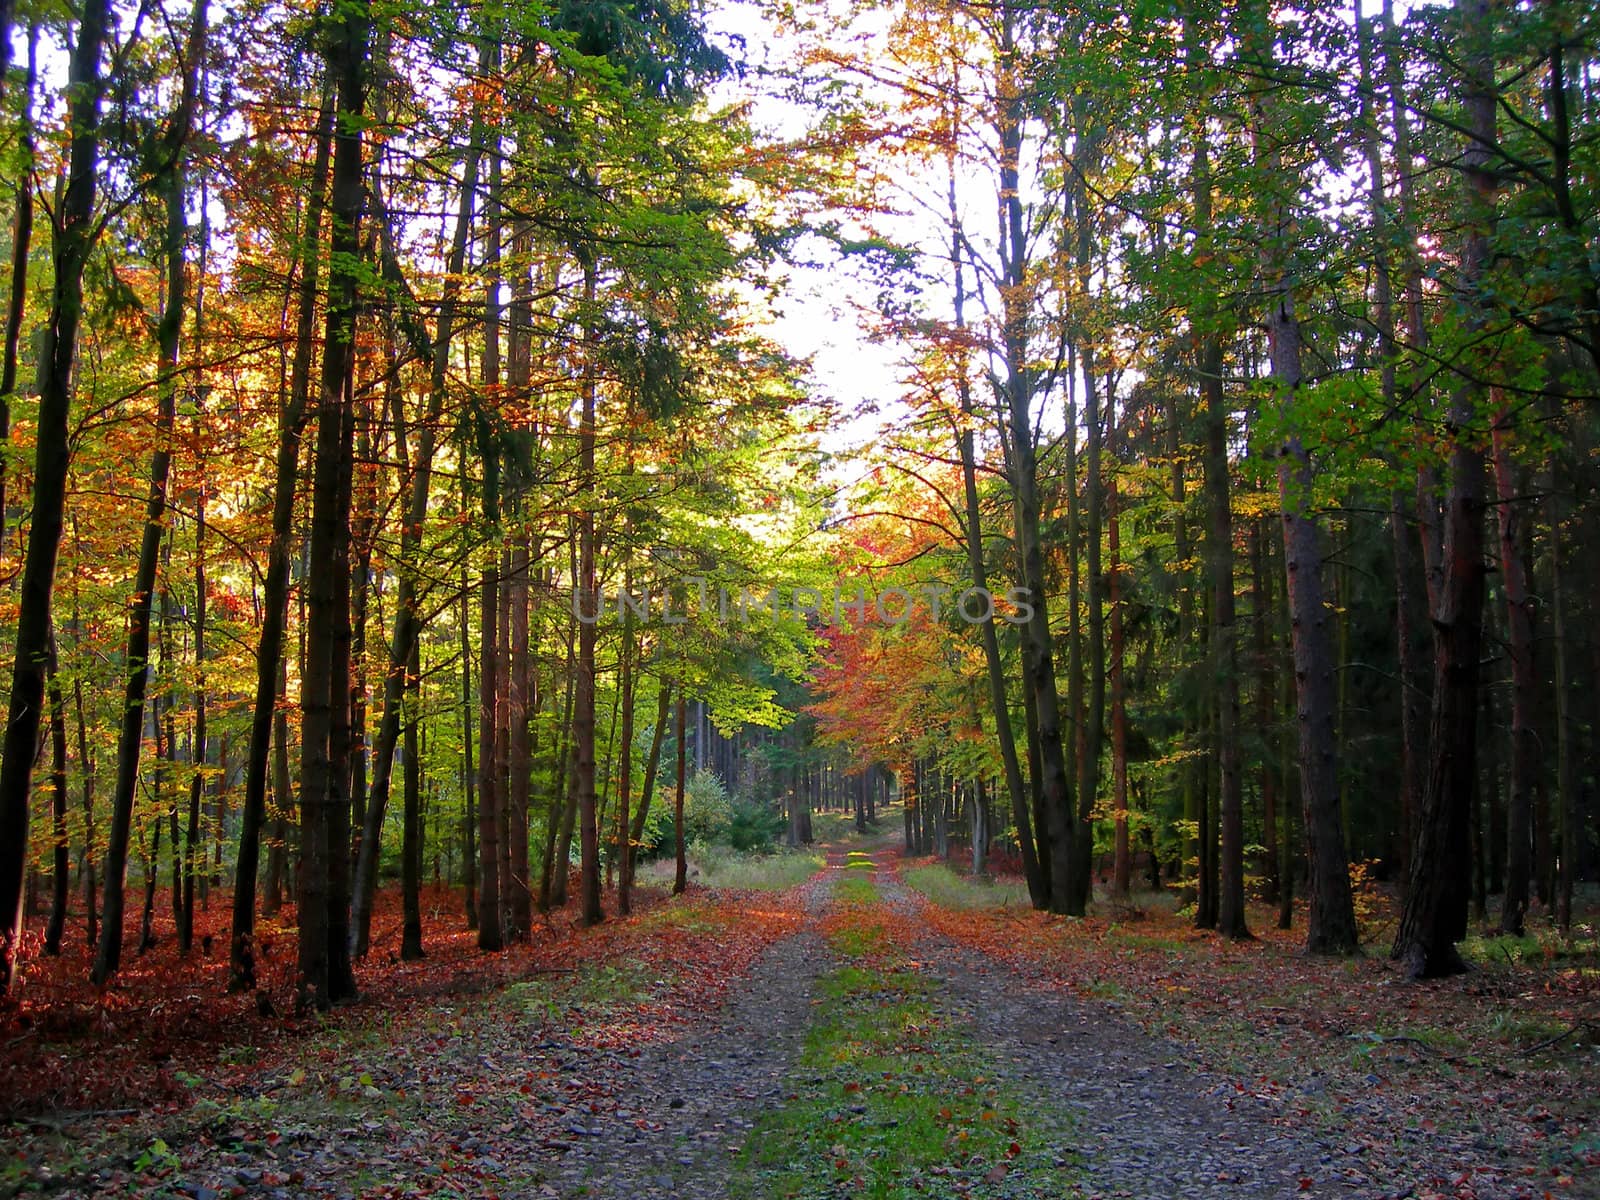 Autumn road by drakodav